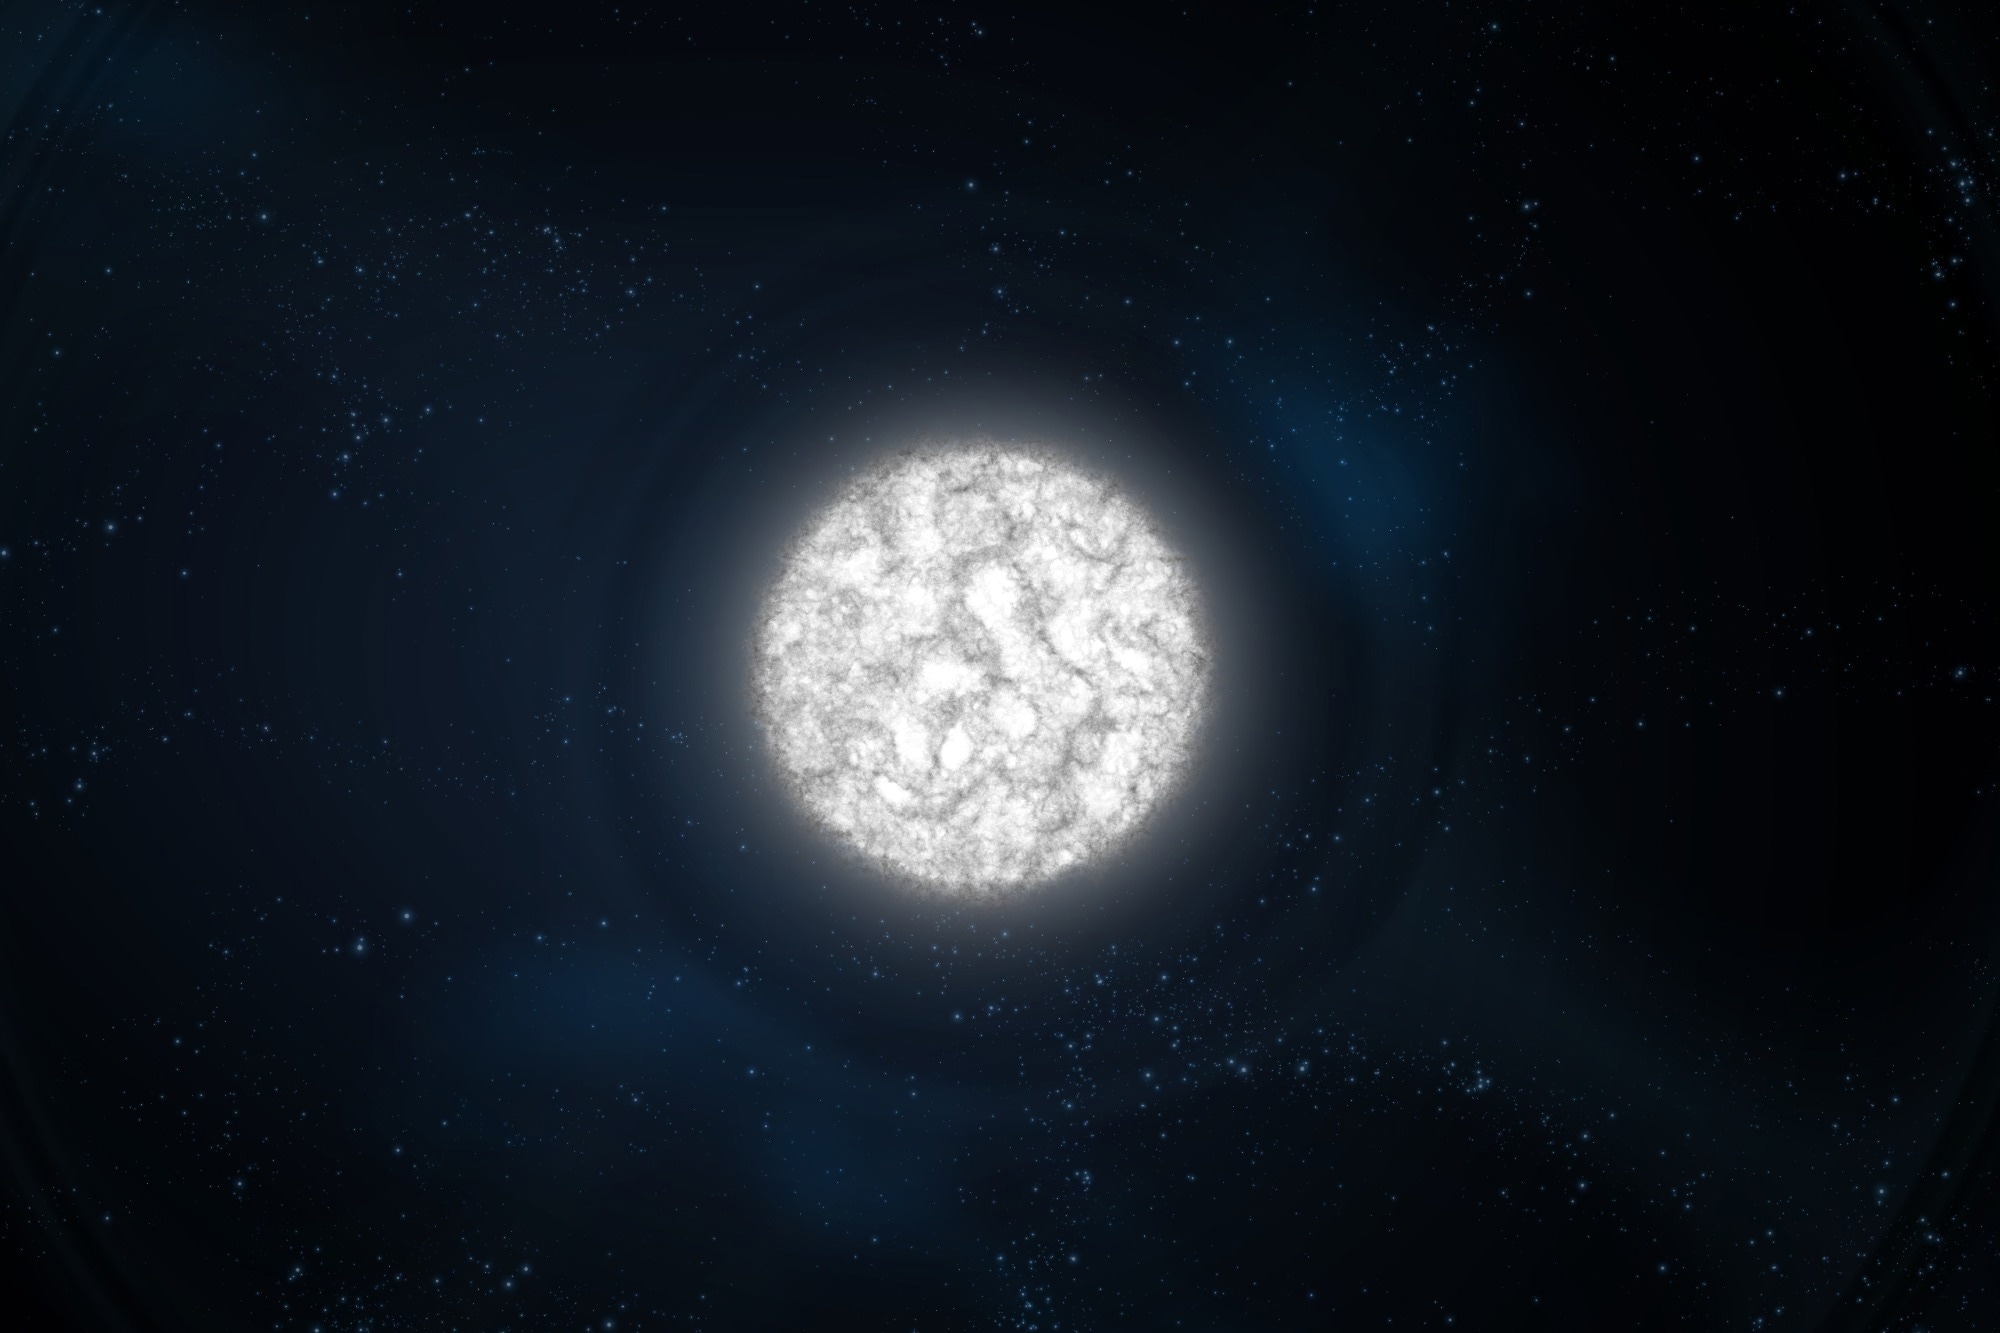 Researchers Investigate the Development of Ultra-Massive Carbon-Oxygen White Dwarfs.